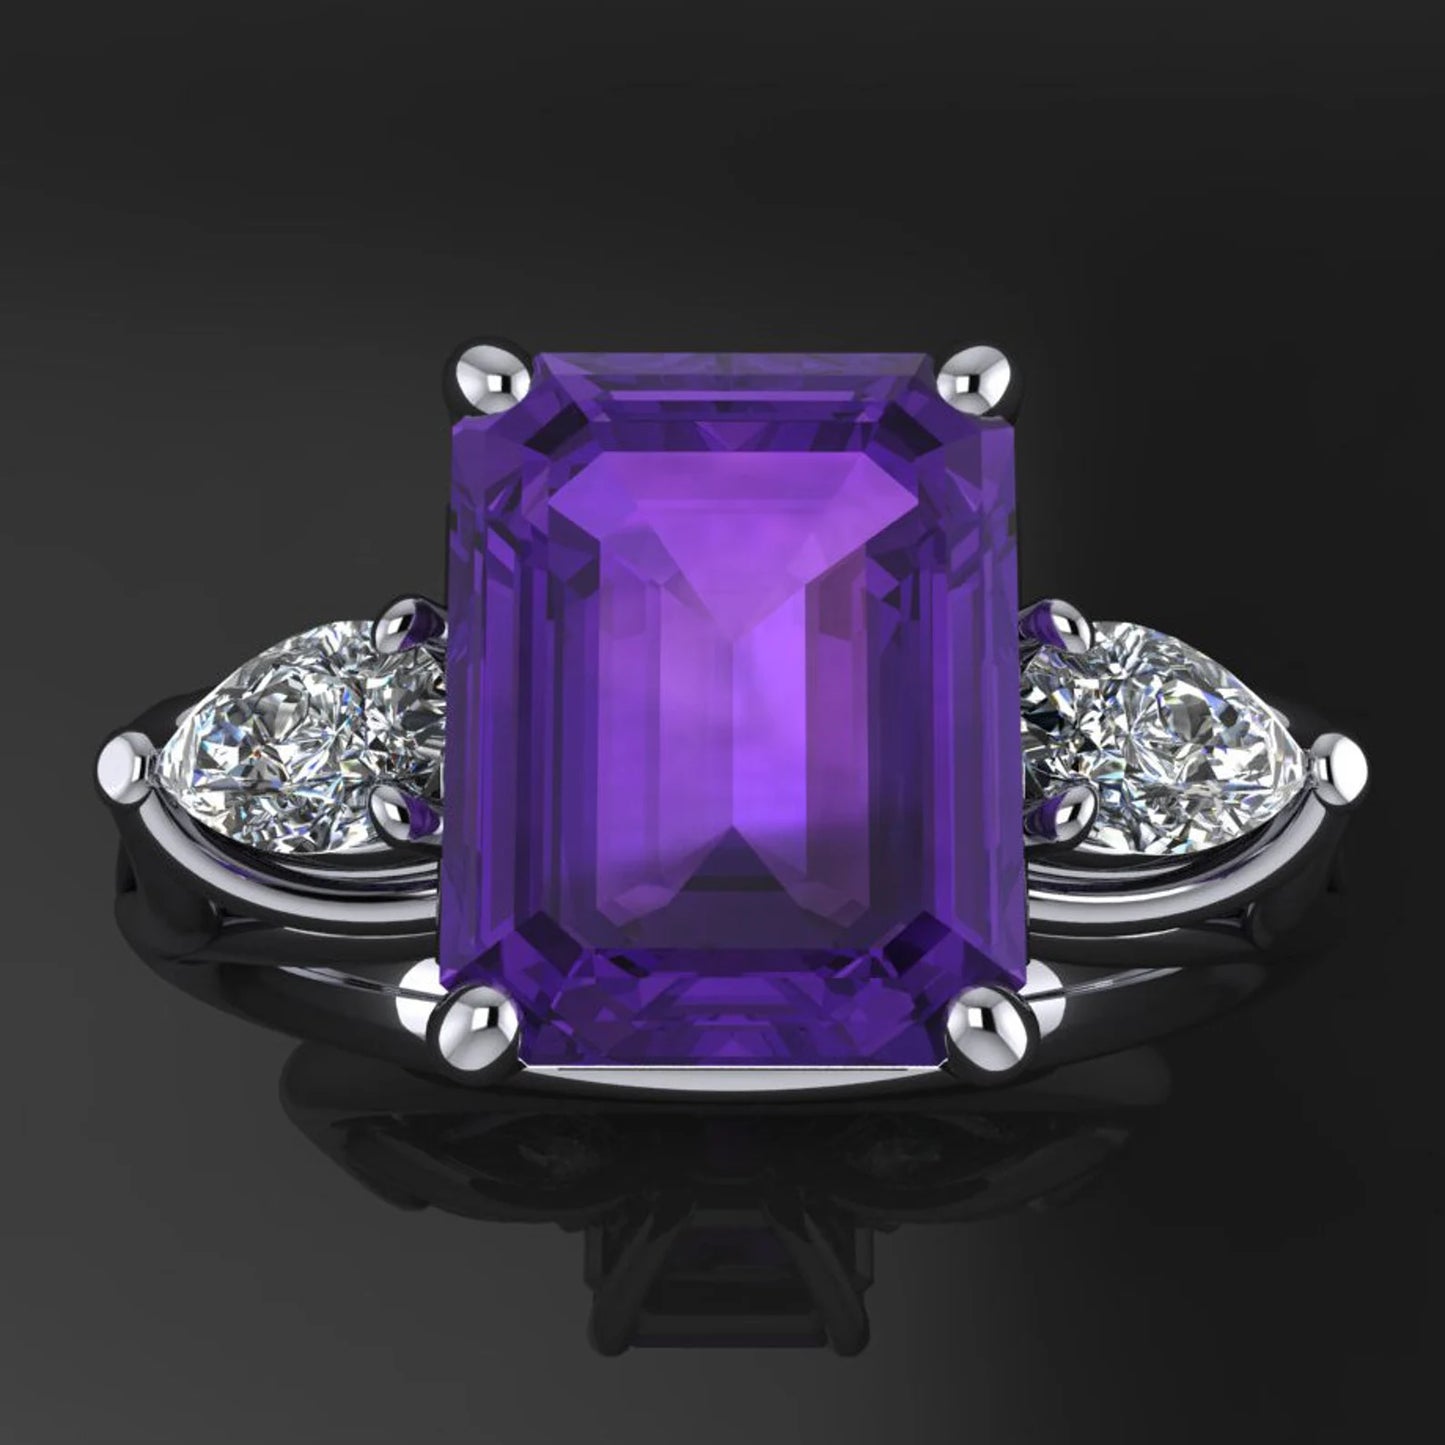 crazy rich asians ring - 2 carat amethyst ring, moissanite side stones - J Hollywood Designs